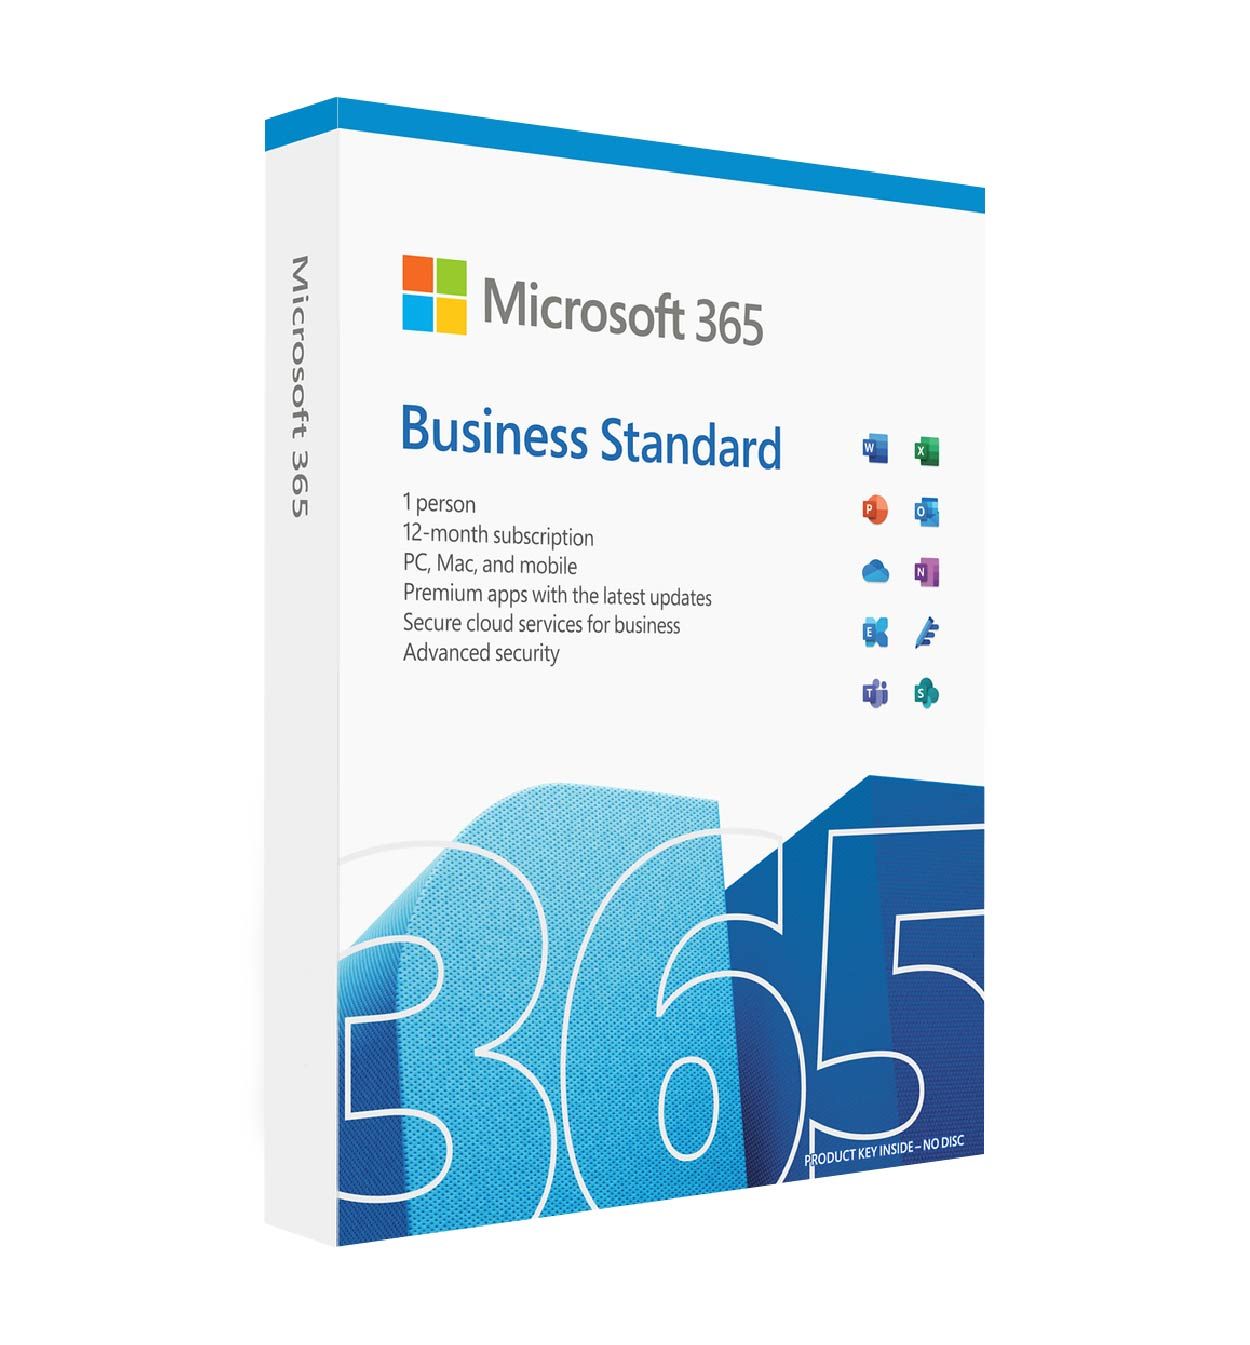 microsoft 365 business standard box